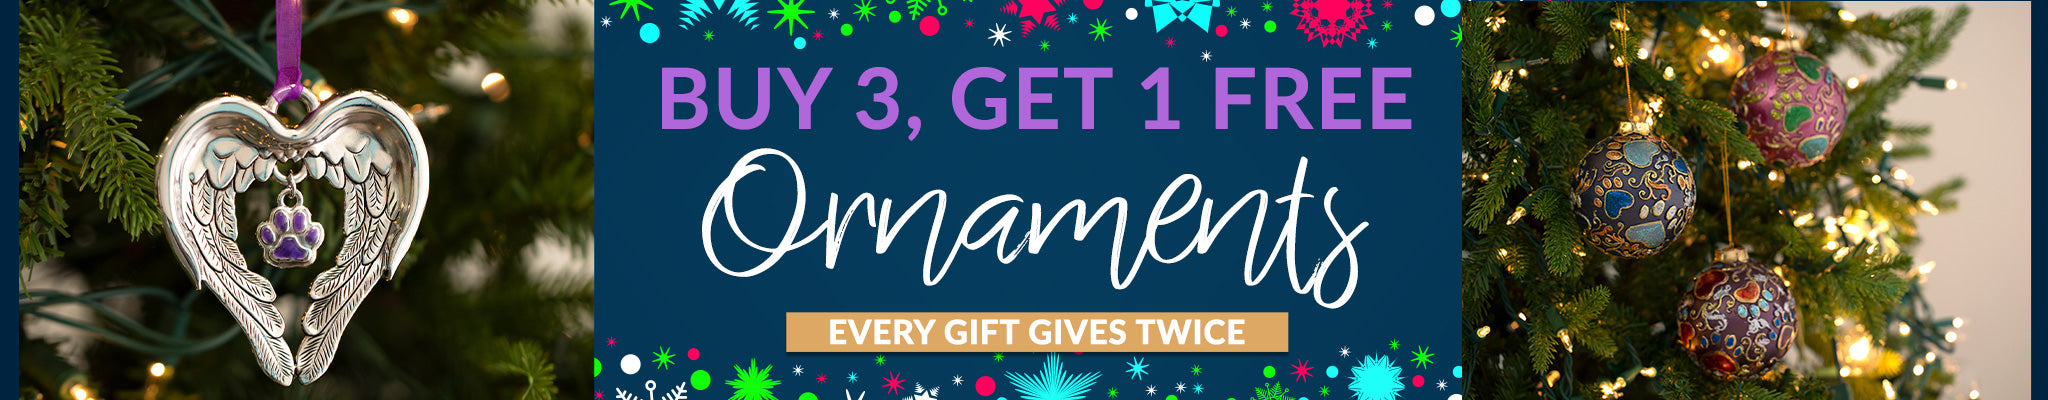 Buy 3, Get 1 Free Ornaments | Shop ASAP